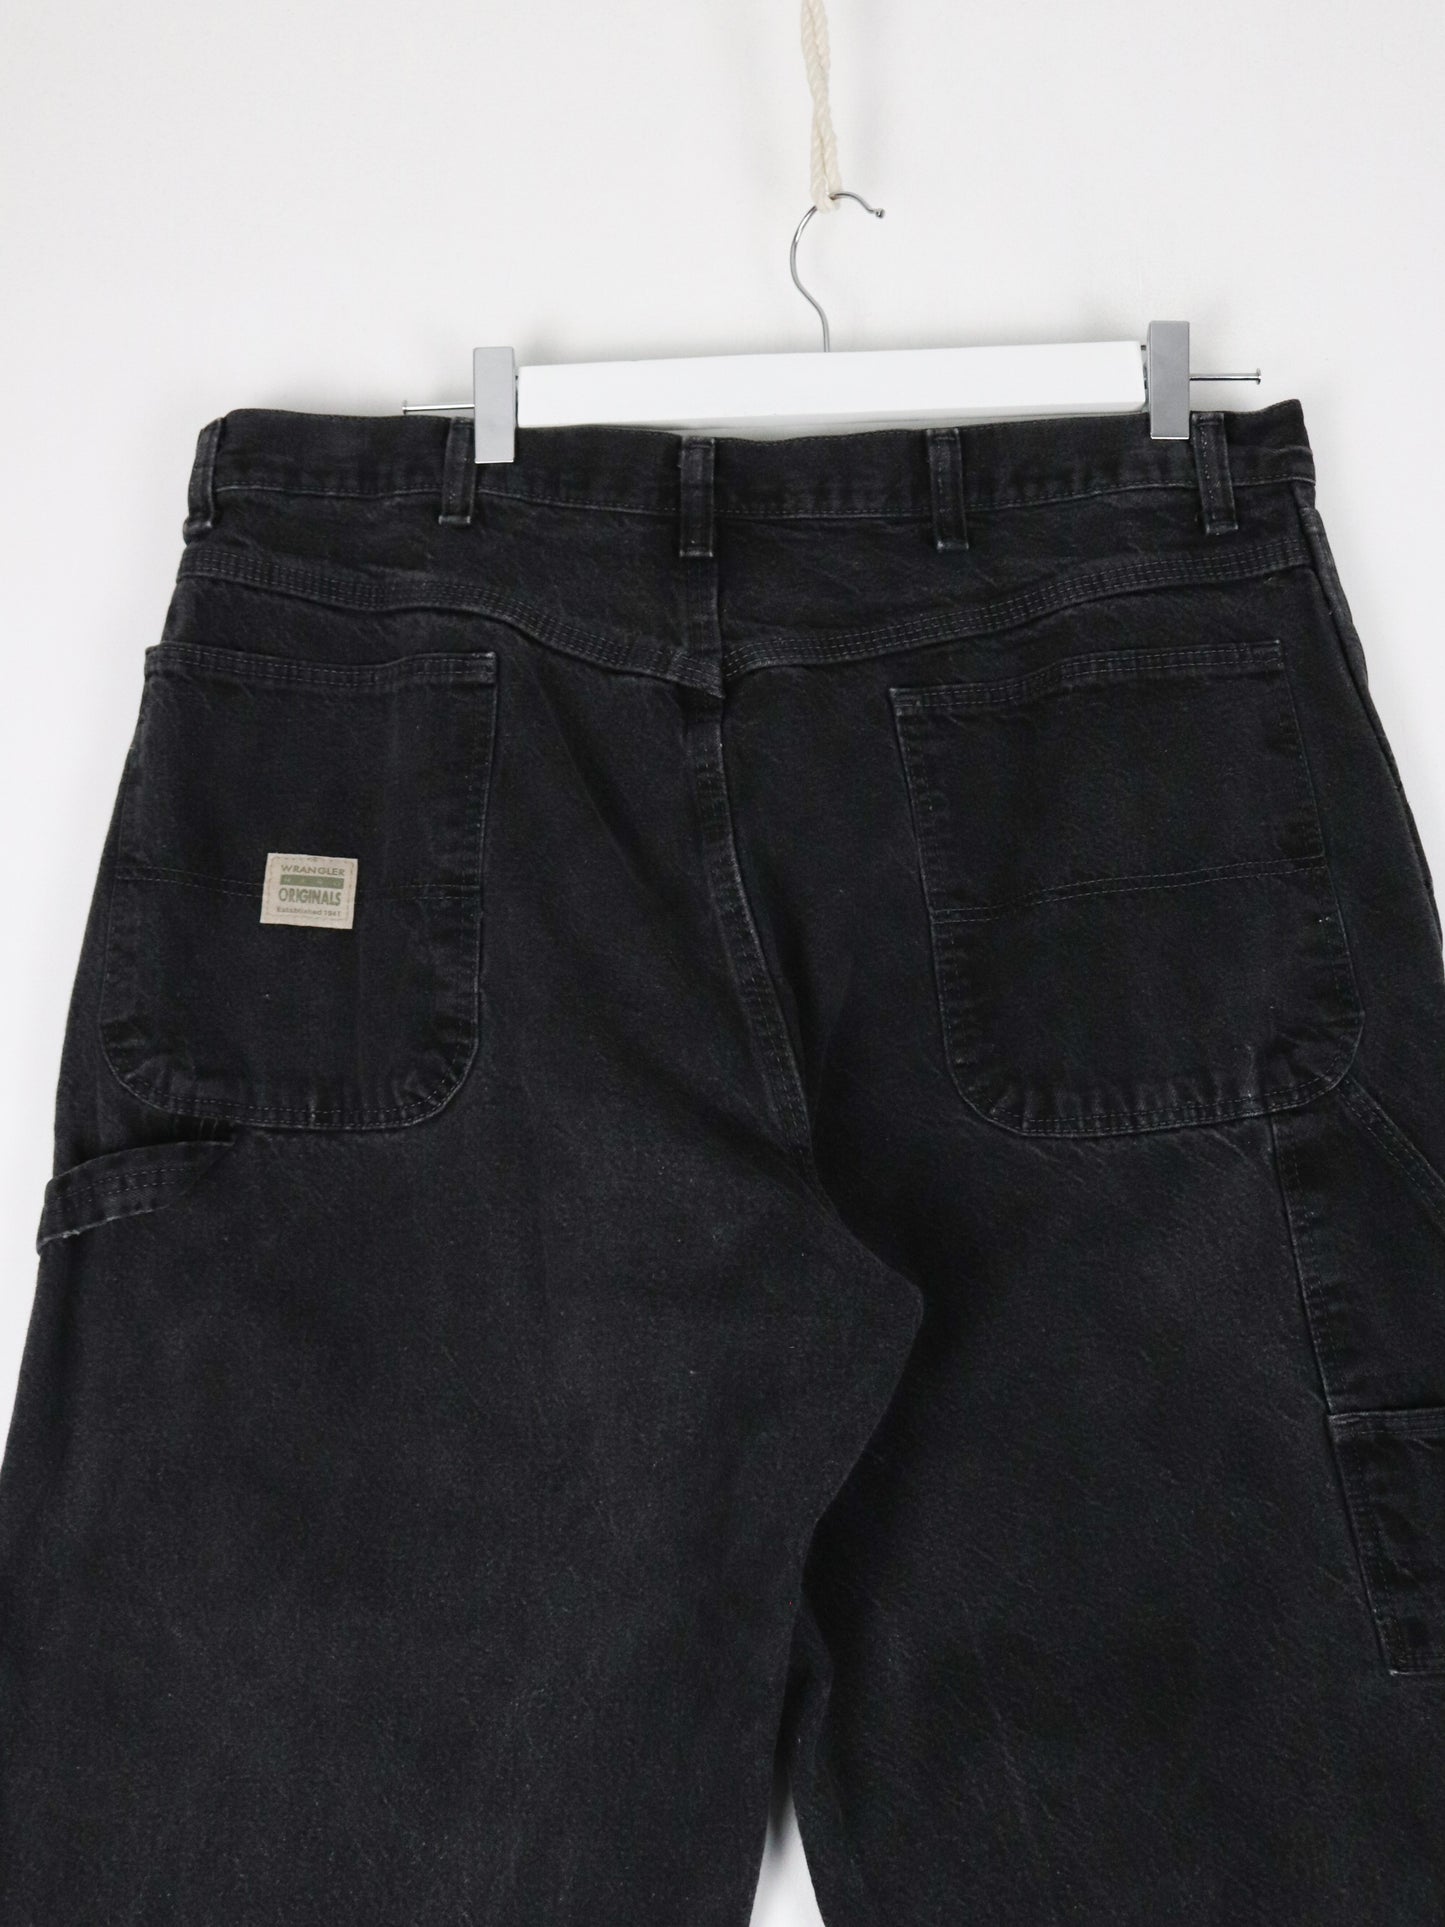 Vintage Wrangler Pants Fits Mens 36 x 30 Black Denim Carpenters